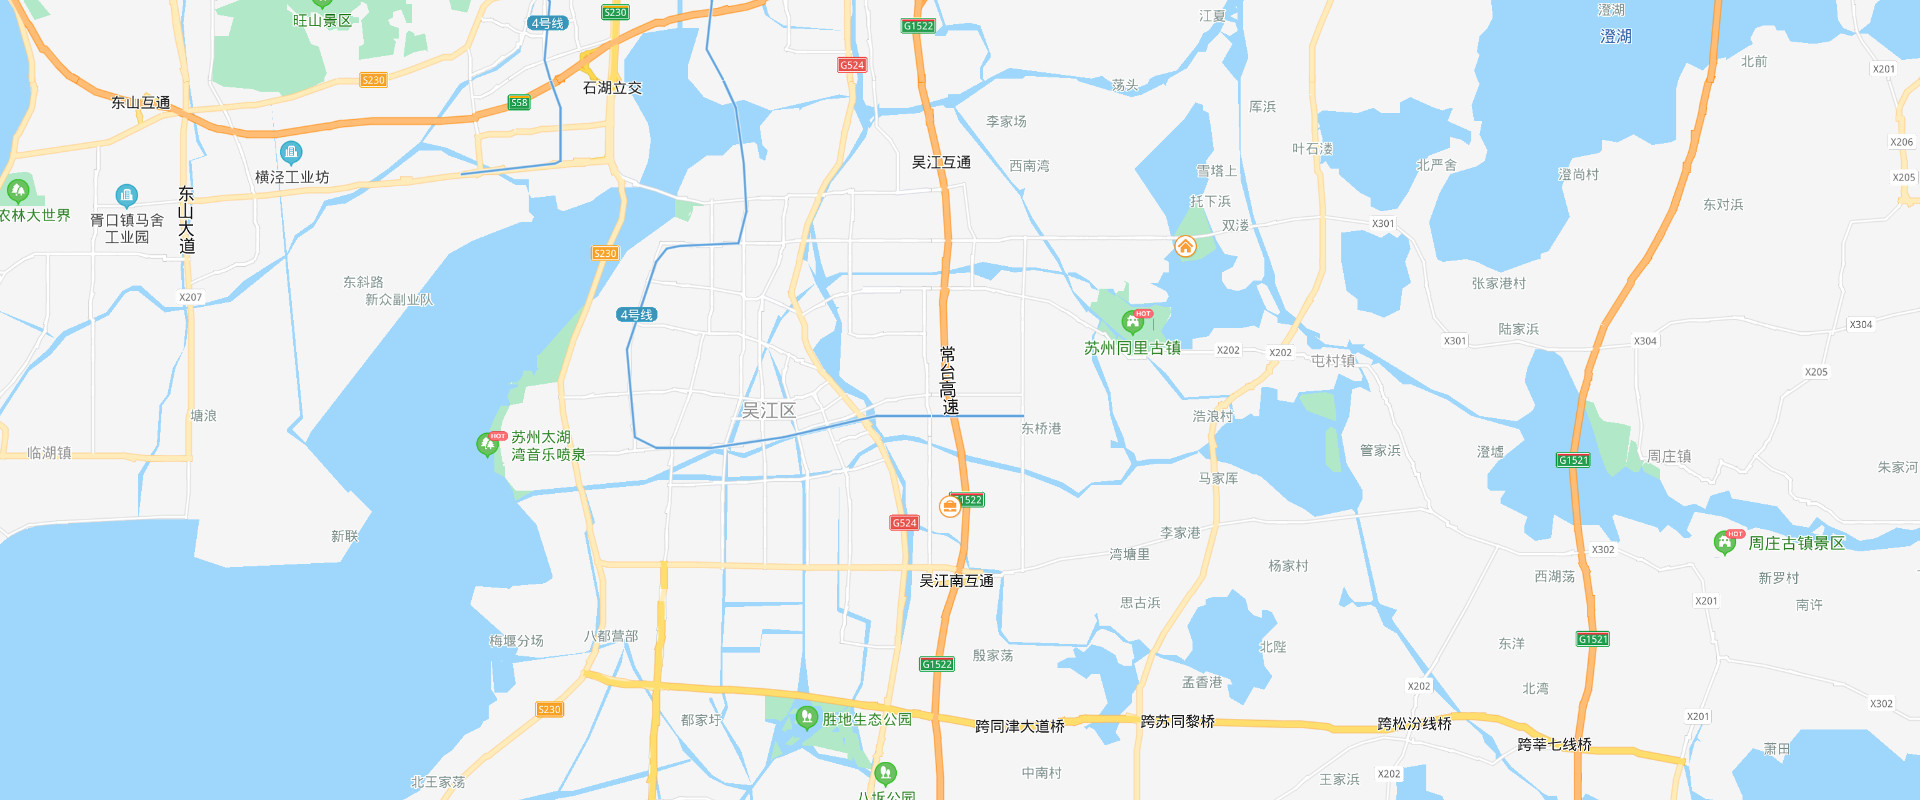 wujiang map.jpg